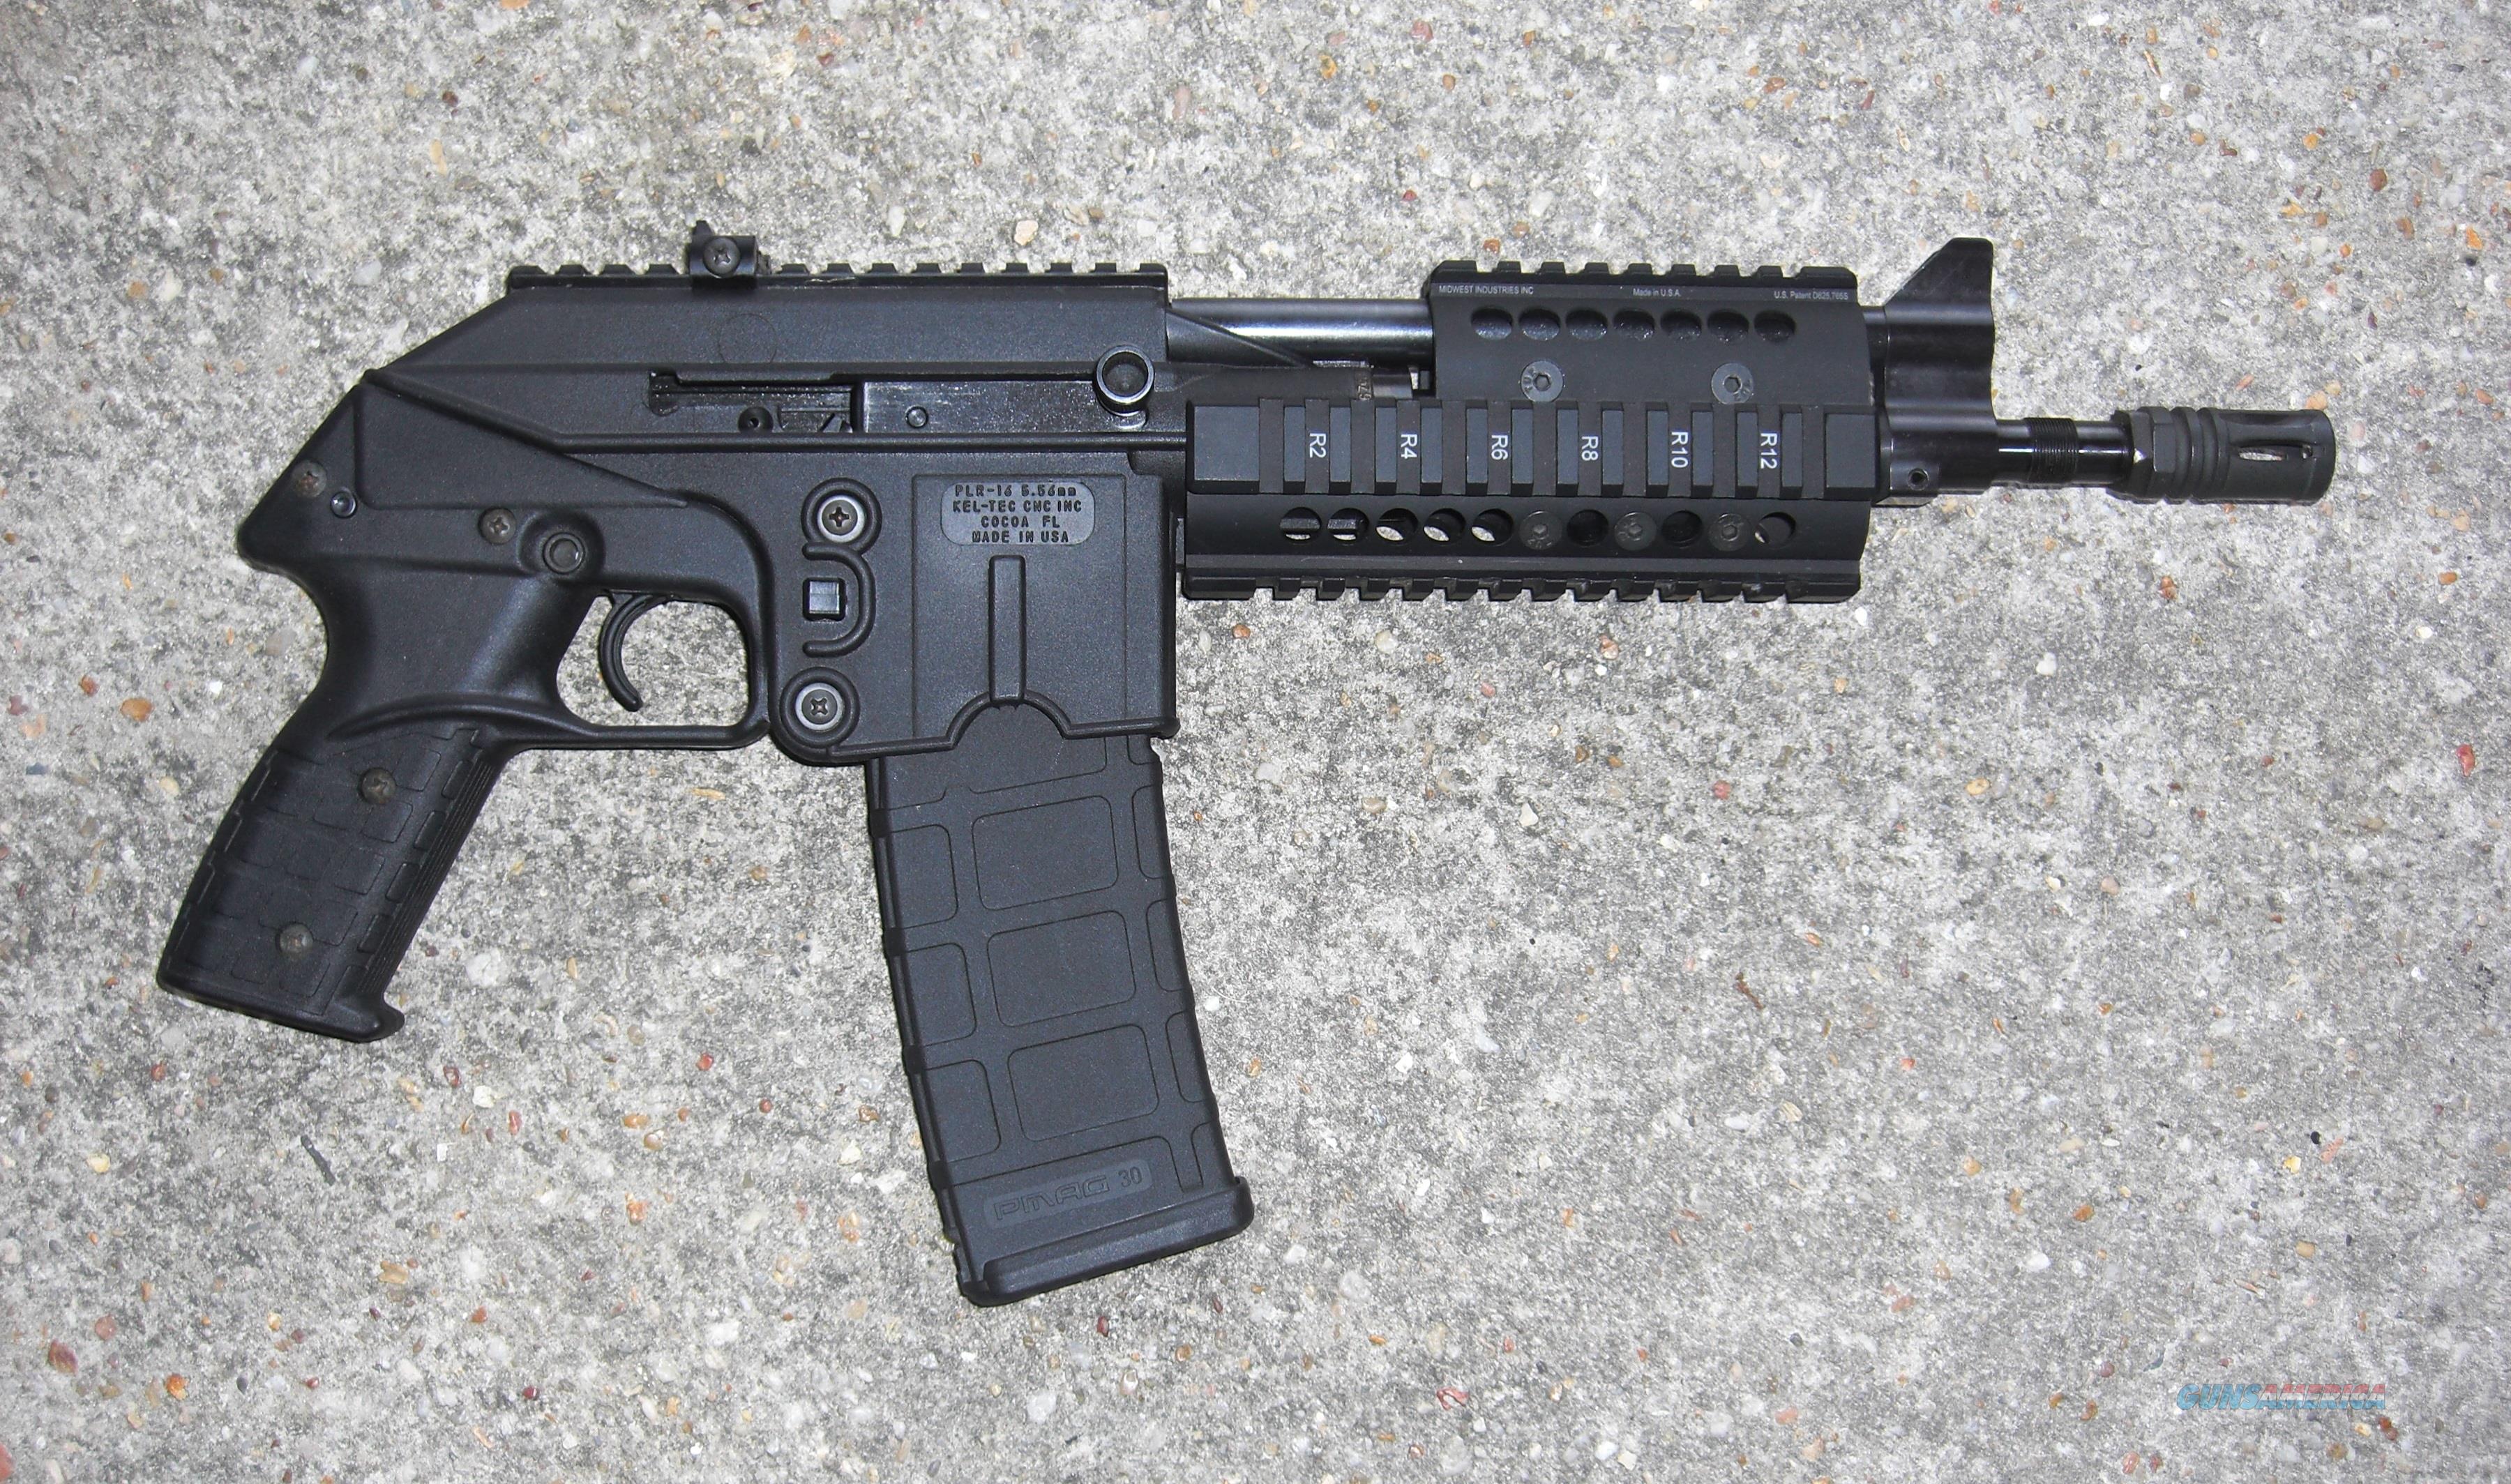 This used Kel-Tec PLR-16 pistol fires the 5.56mm/.223 round. 